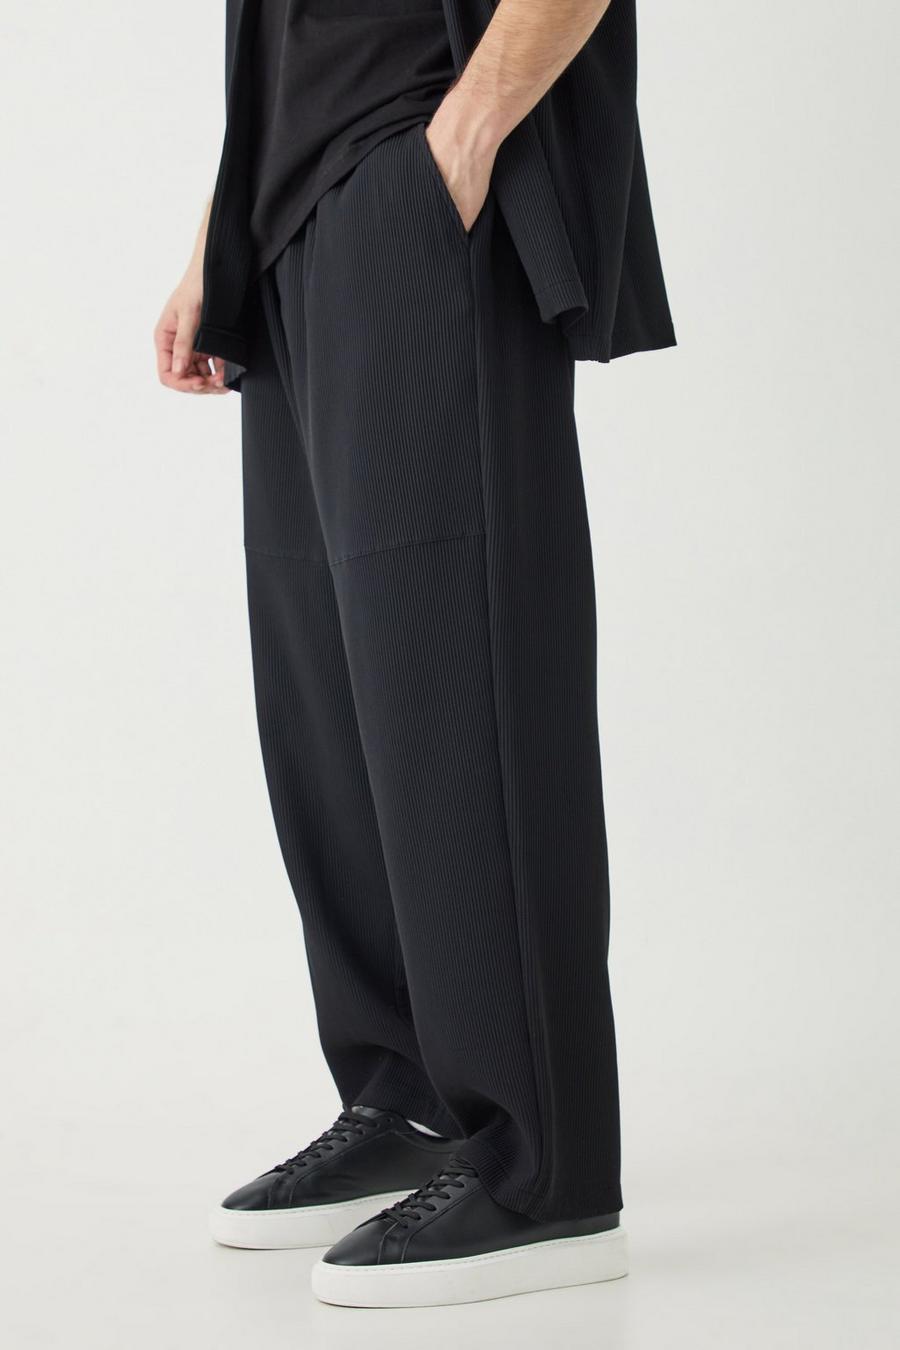 Tall - Pantalon court plissé, Black